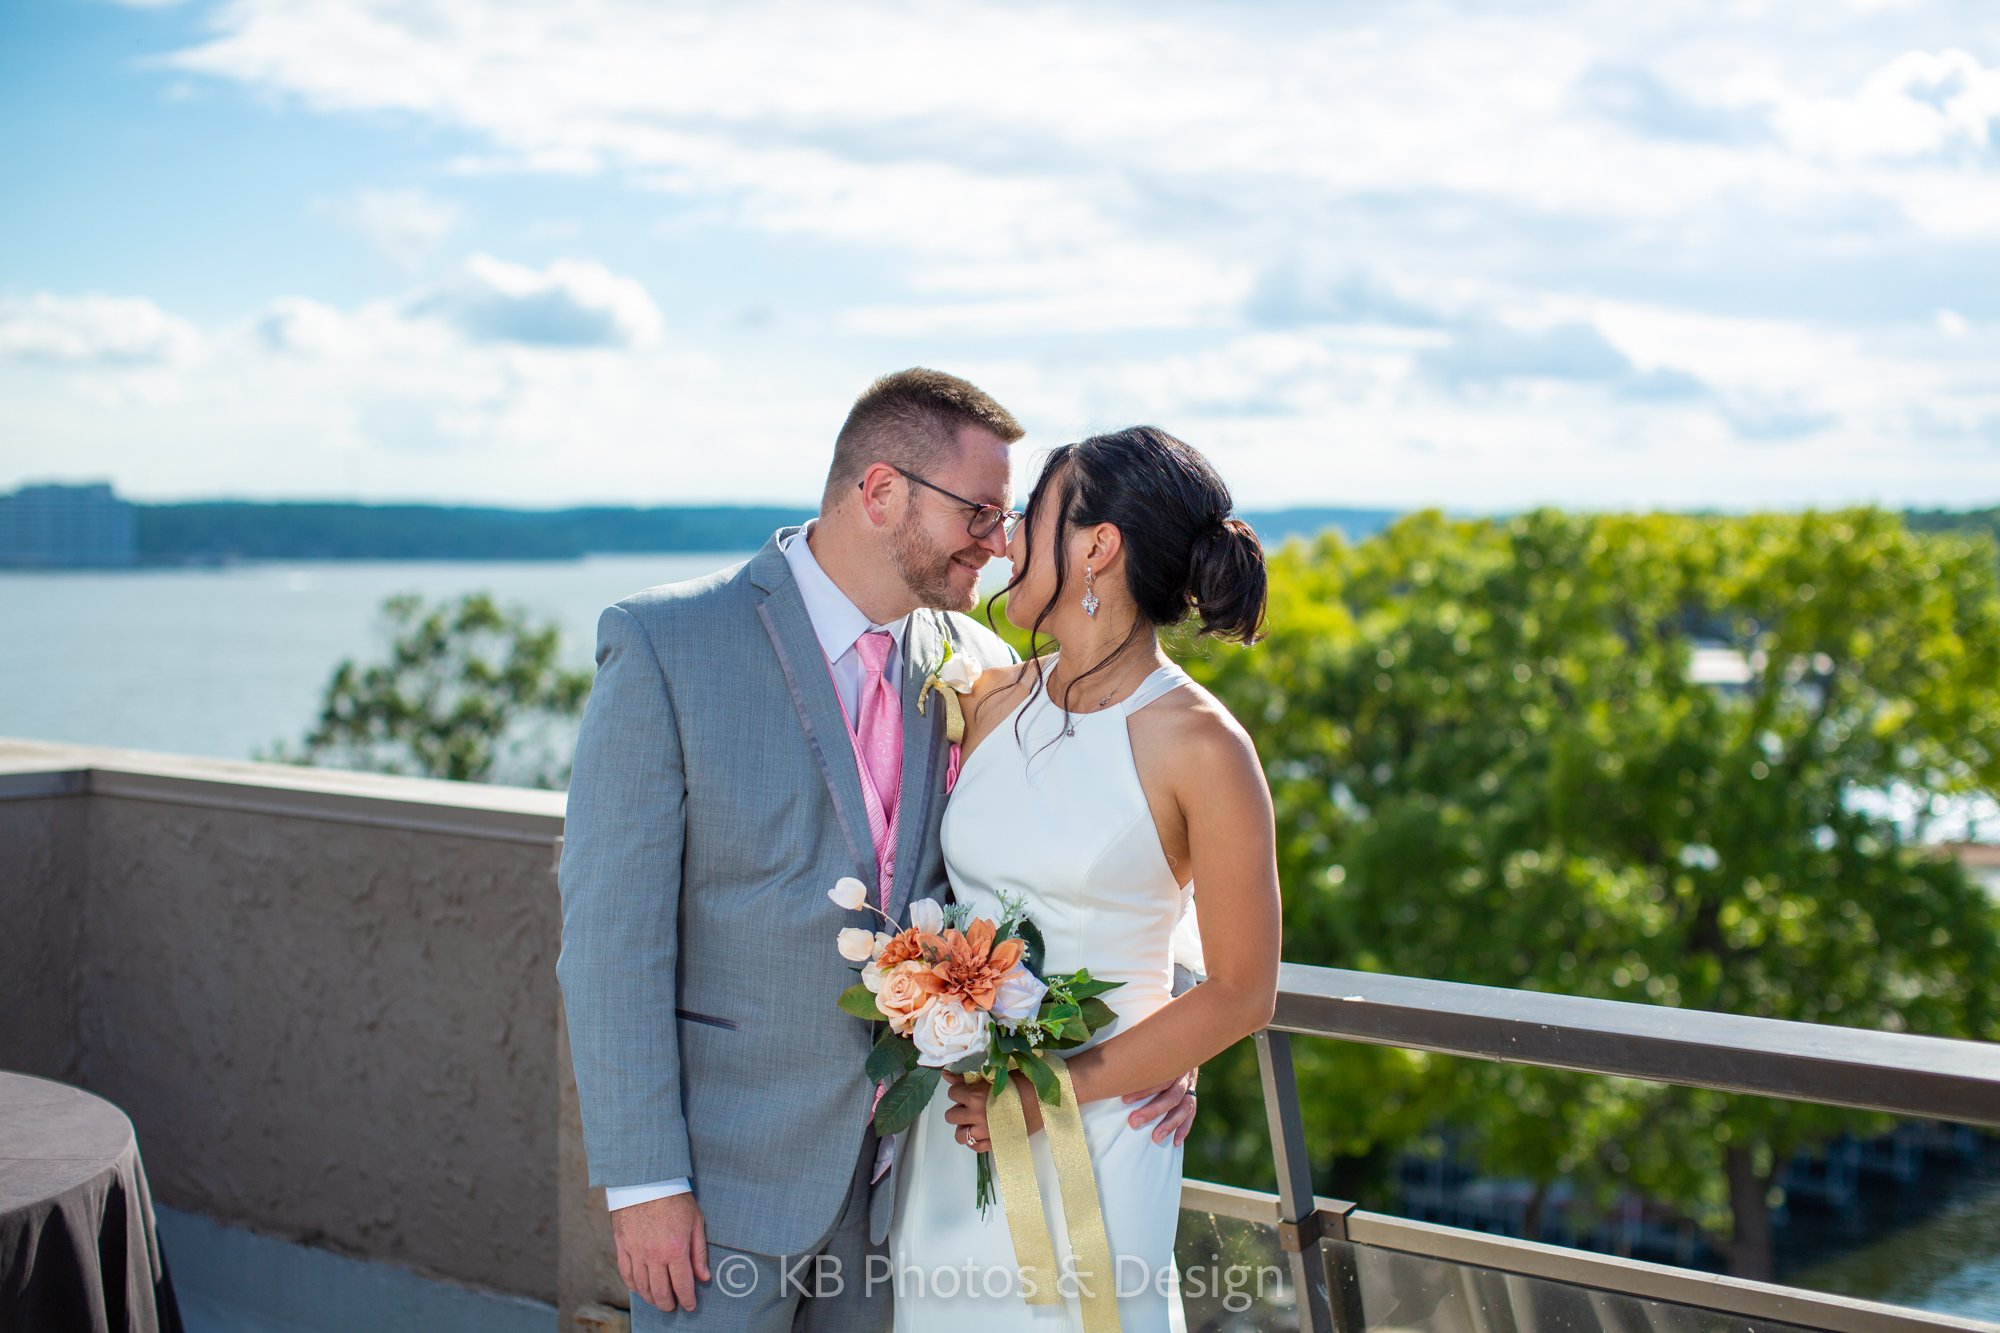 Wedding-Destination-Photography-Lake-of-the-Ozarks-Missouri-Nick_Irene-Jefferson-City-bride-groom-Lodge-of-Four-Seasons-wedding-photographer-KB-Photos-and-Design-241.jpg